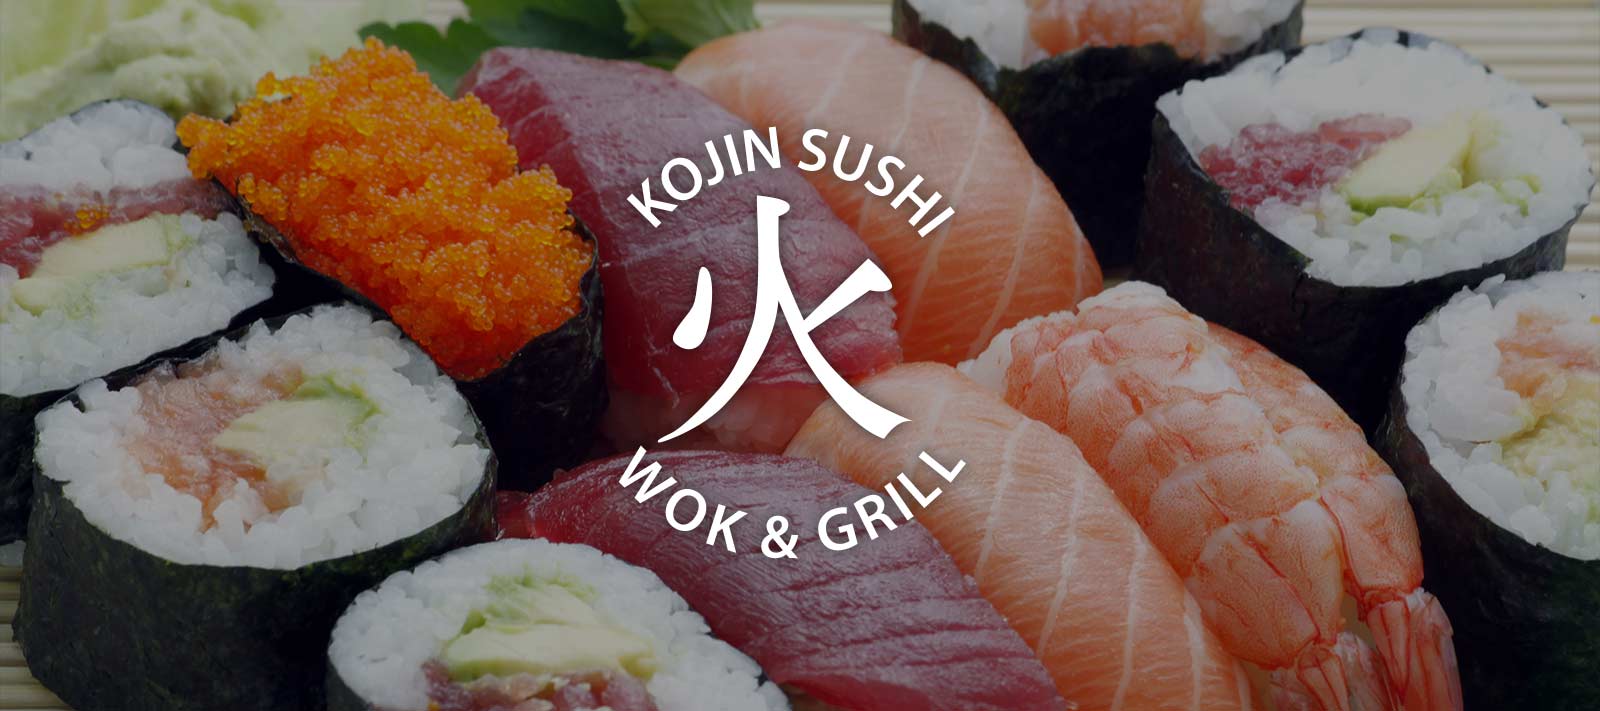 restaurant Kojin Sushi Wok & Grill